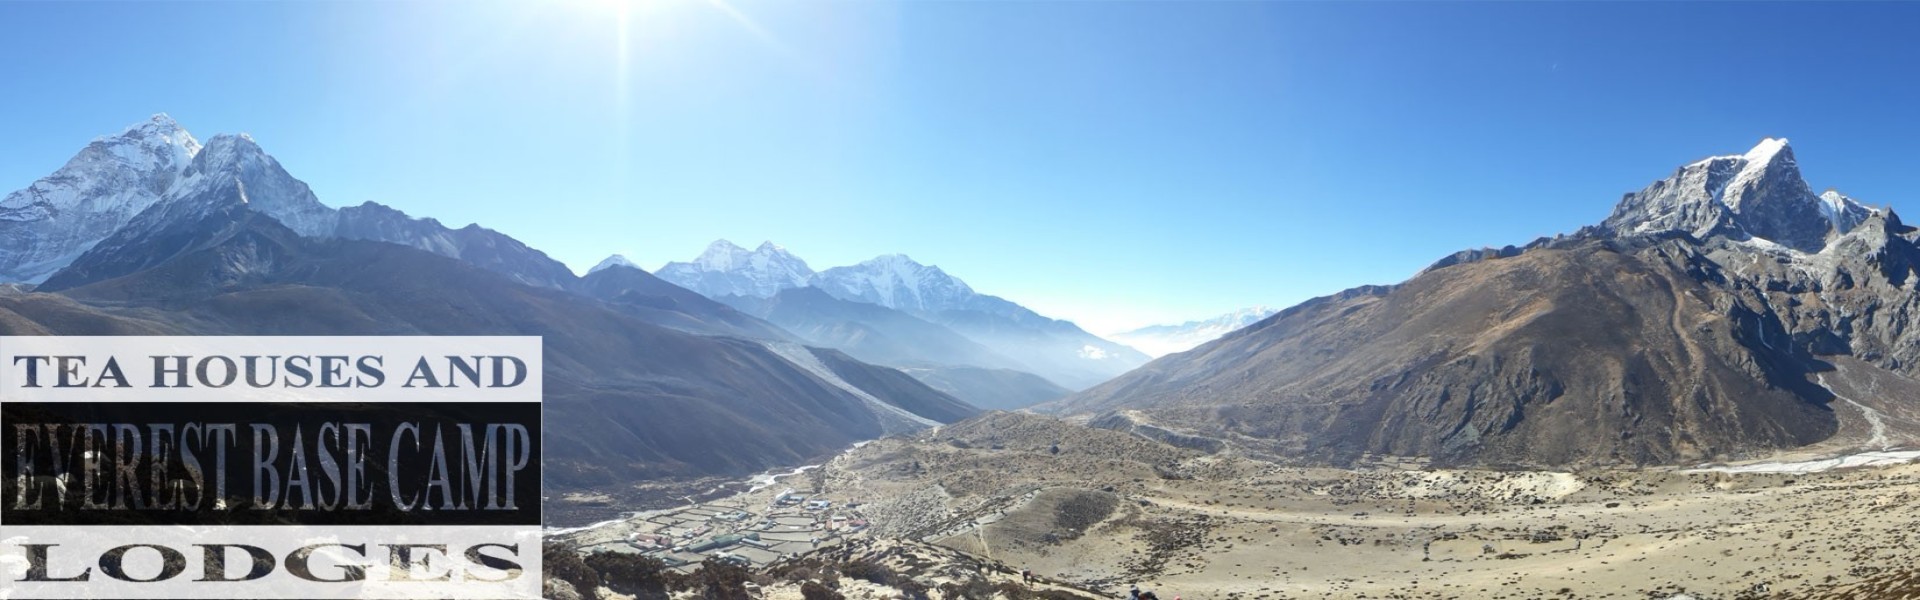 Everest Base Camp Trekking Blogs and Feeds